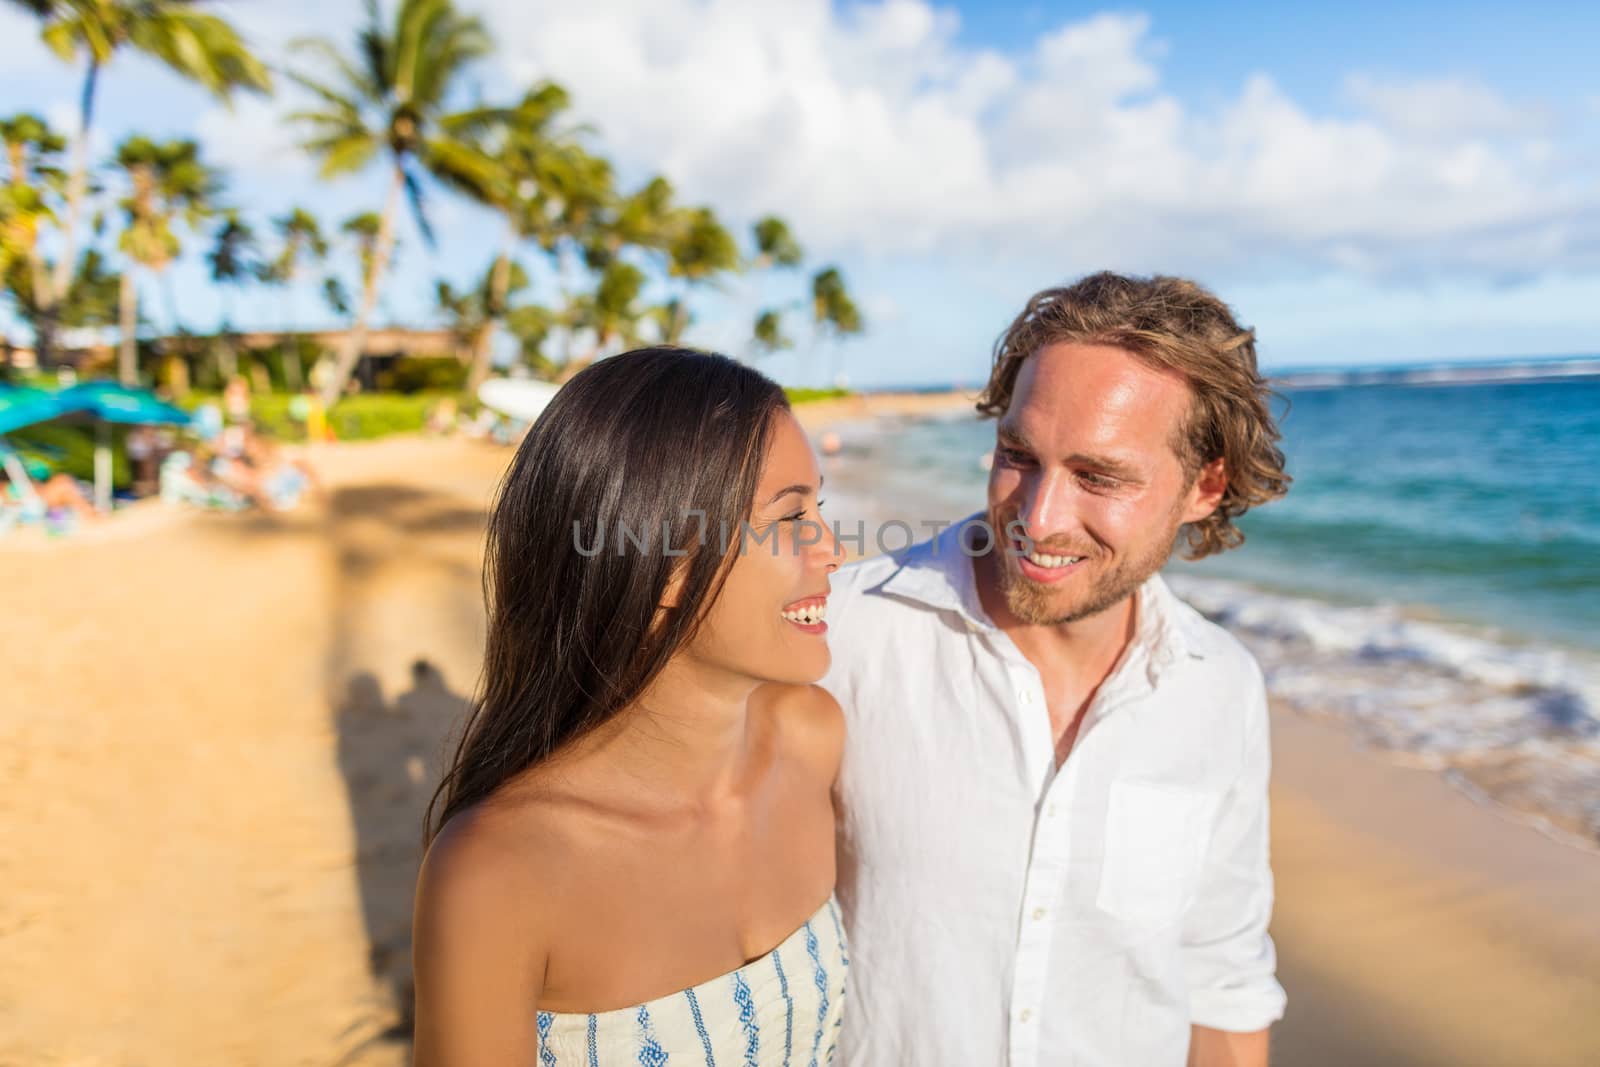 Hawaii travel beach couple laughing together happy on honeymoon vacation. People enjoying hawaiian sunset holidays.